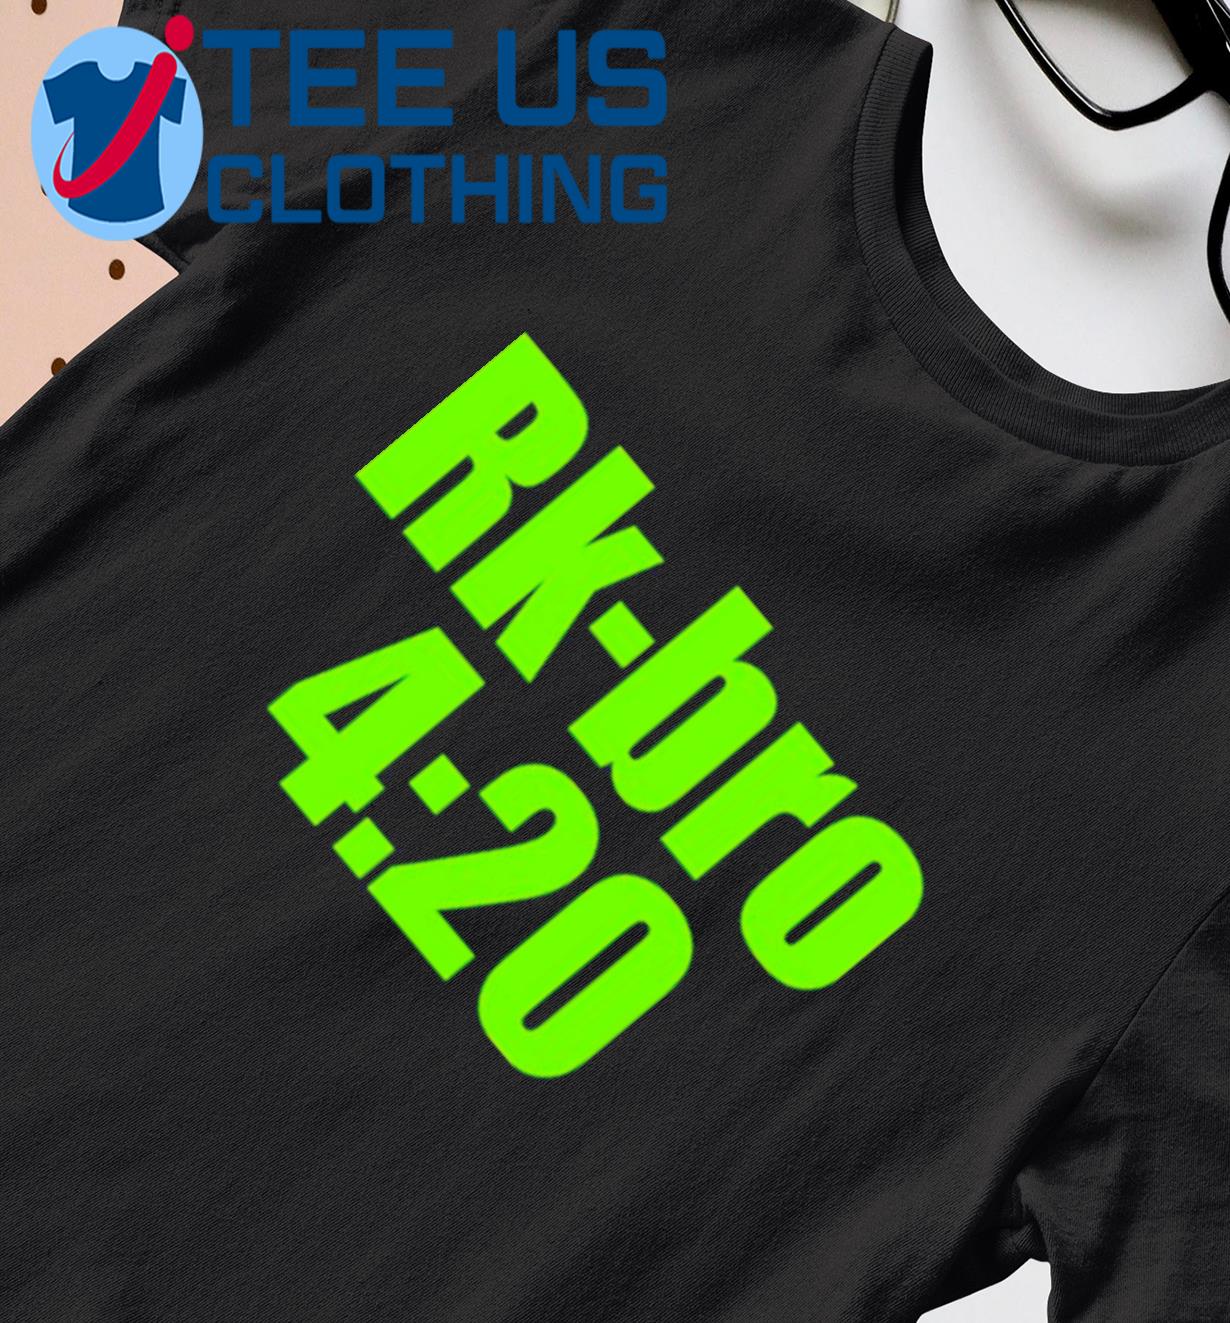 Randy Orton Rk-Bro 4 20 Shirt, Hoodie, Sweater, Long Sleeve And Tank Top